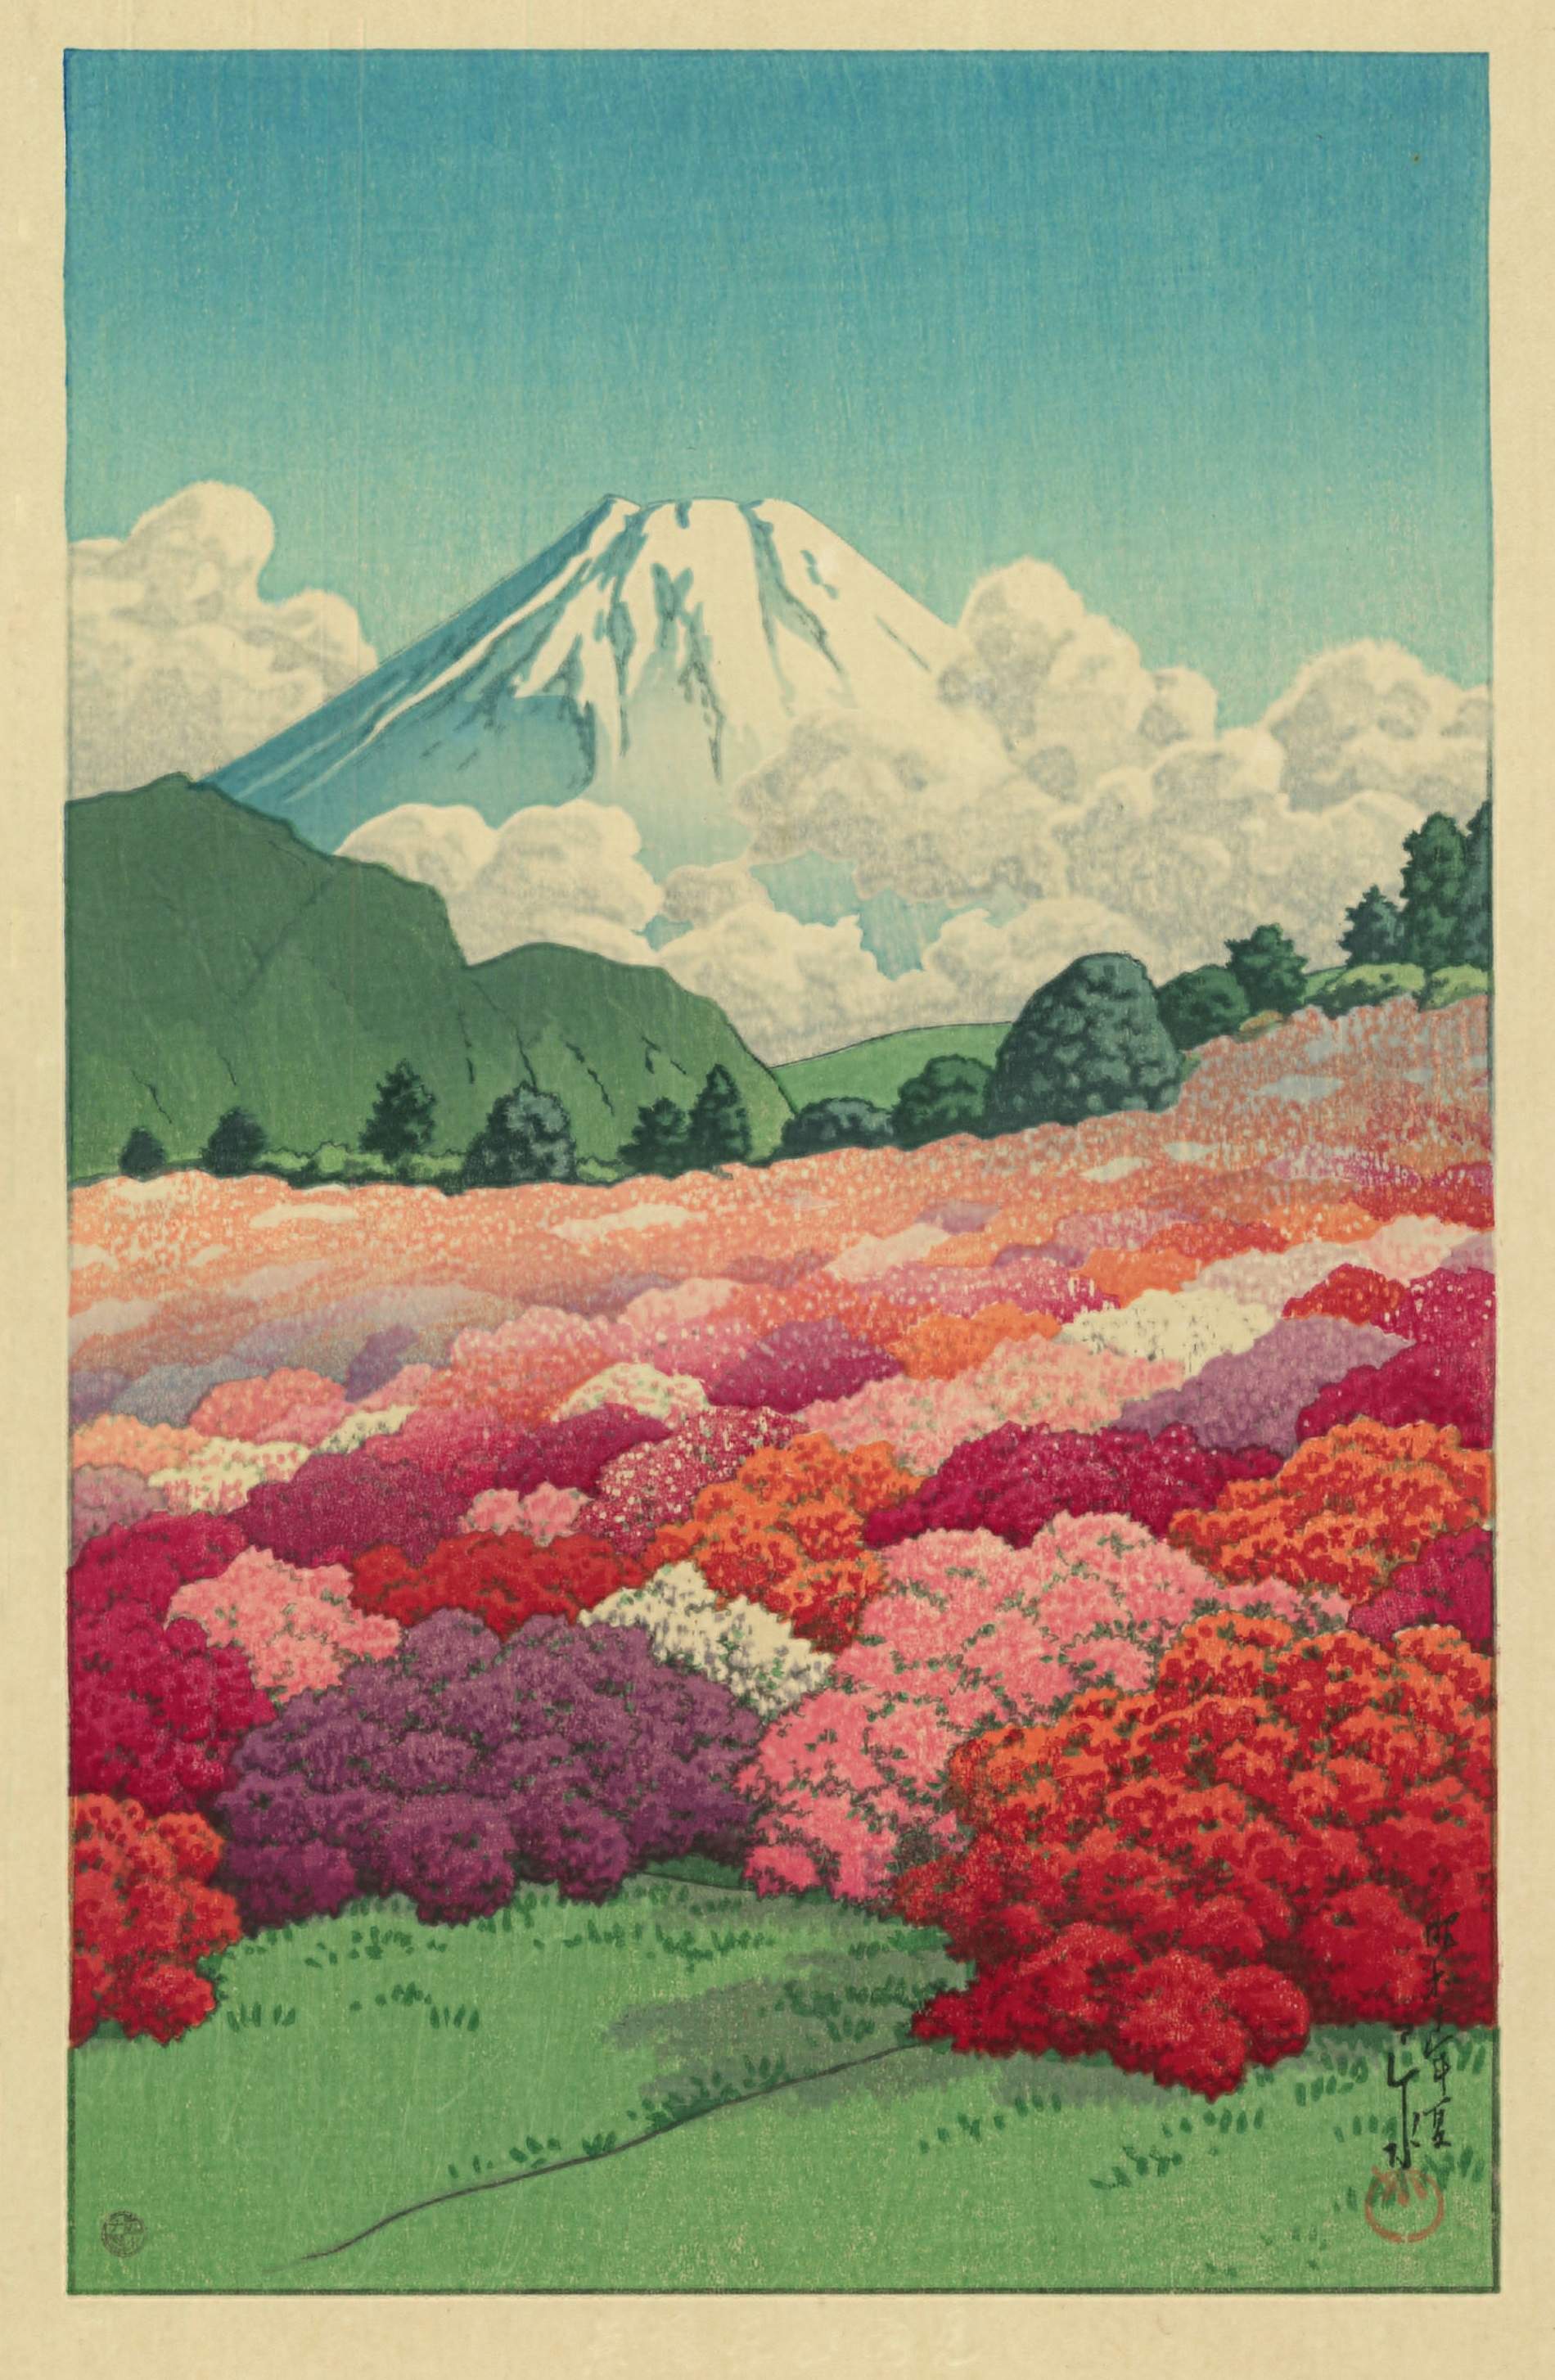 View of Mount Fuji from the Azalea Garden - Kawase Hasui Catalogue woodblock print